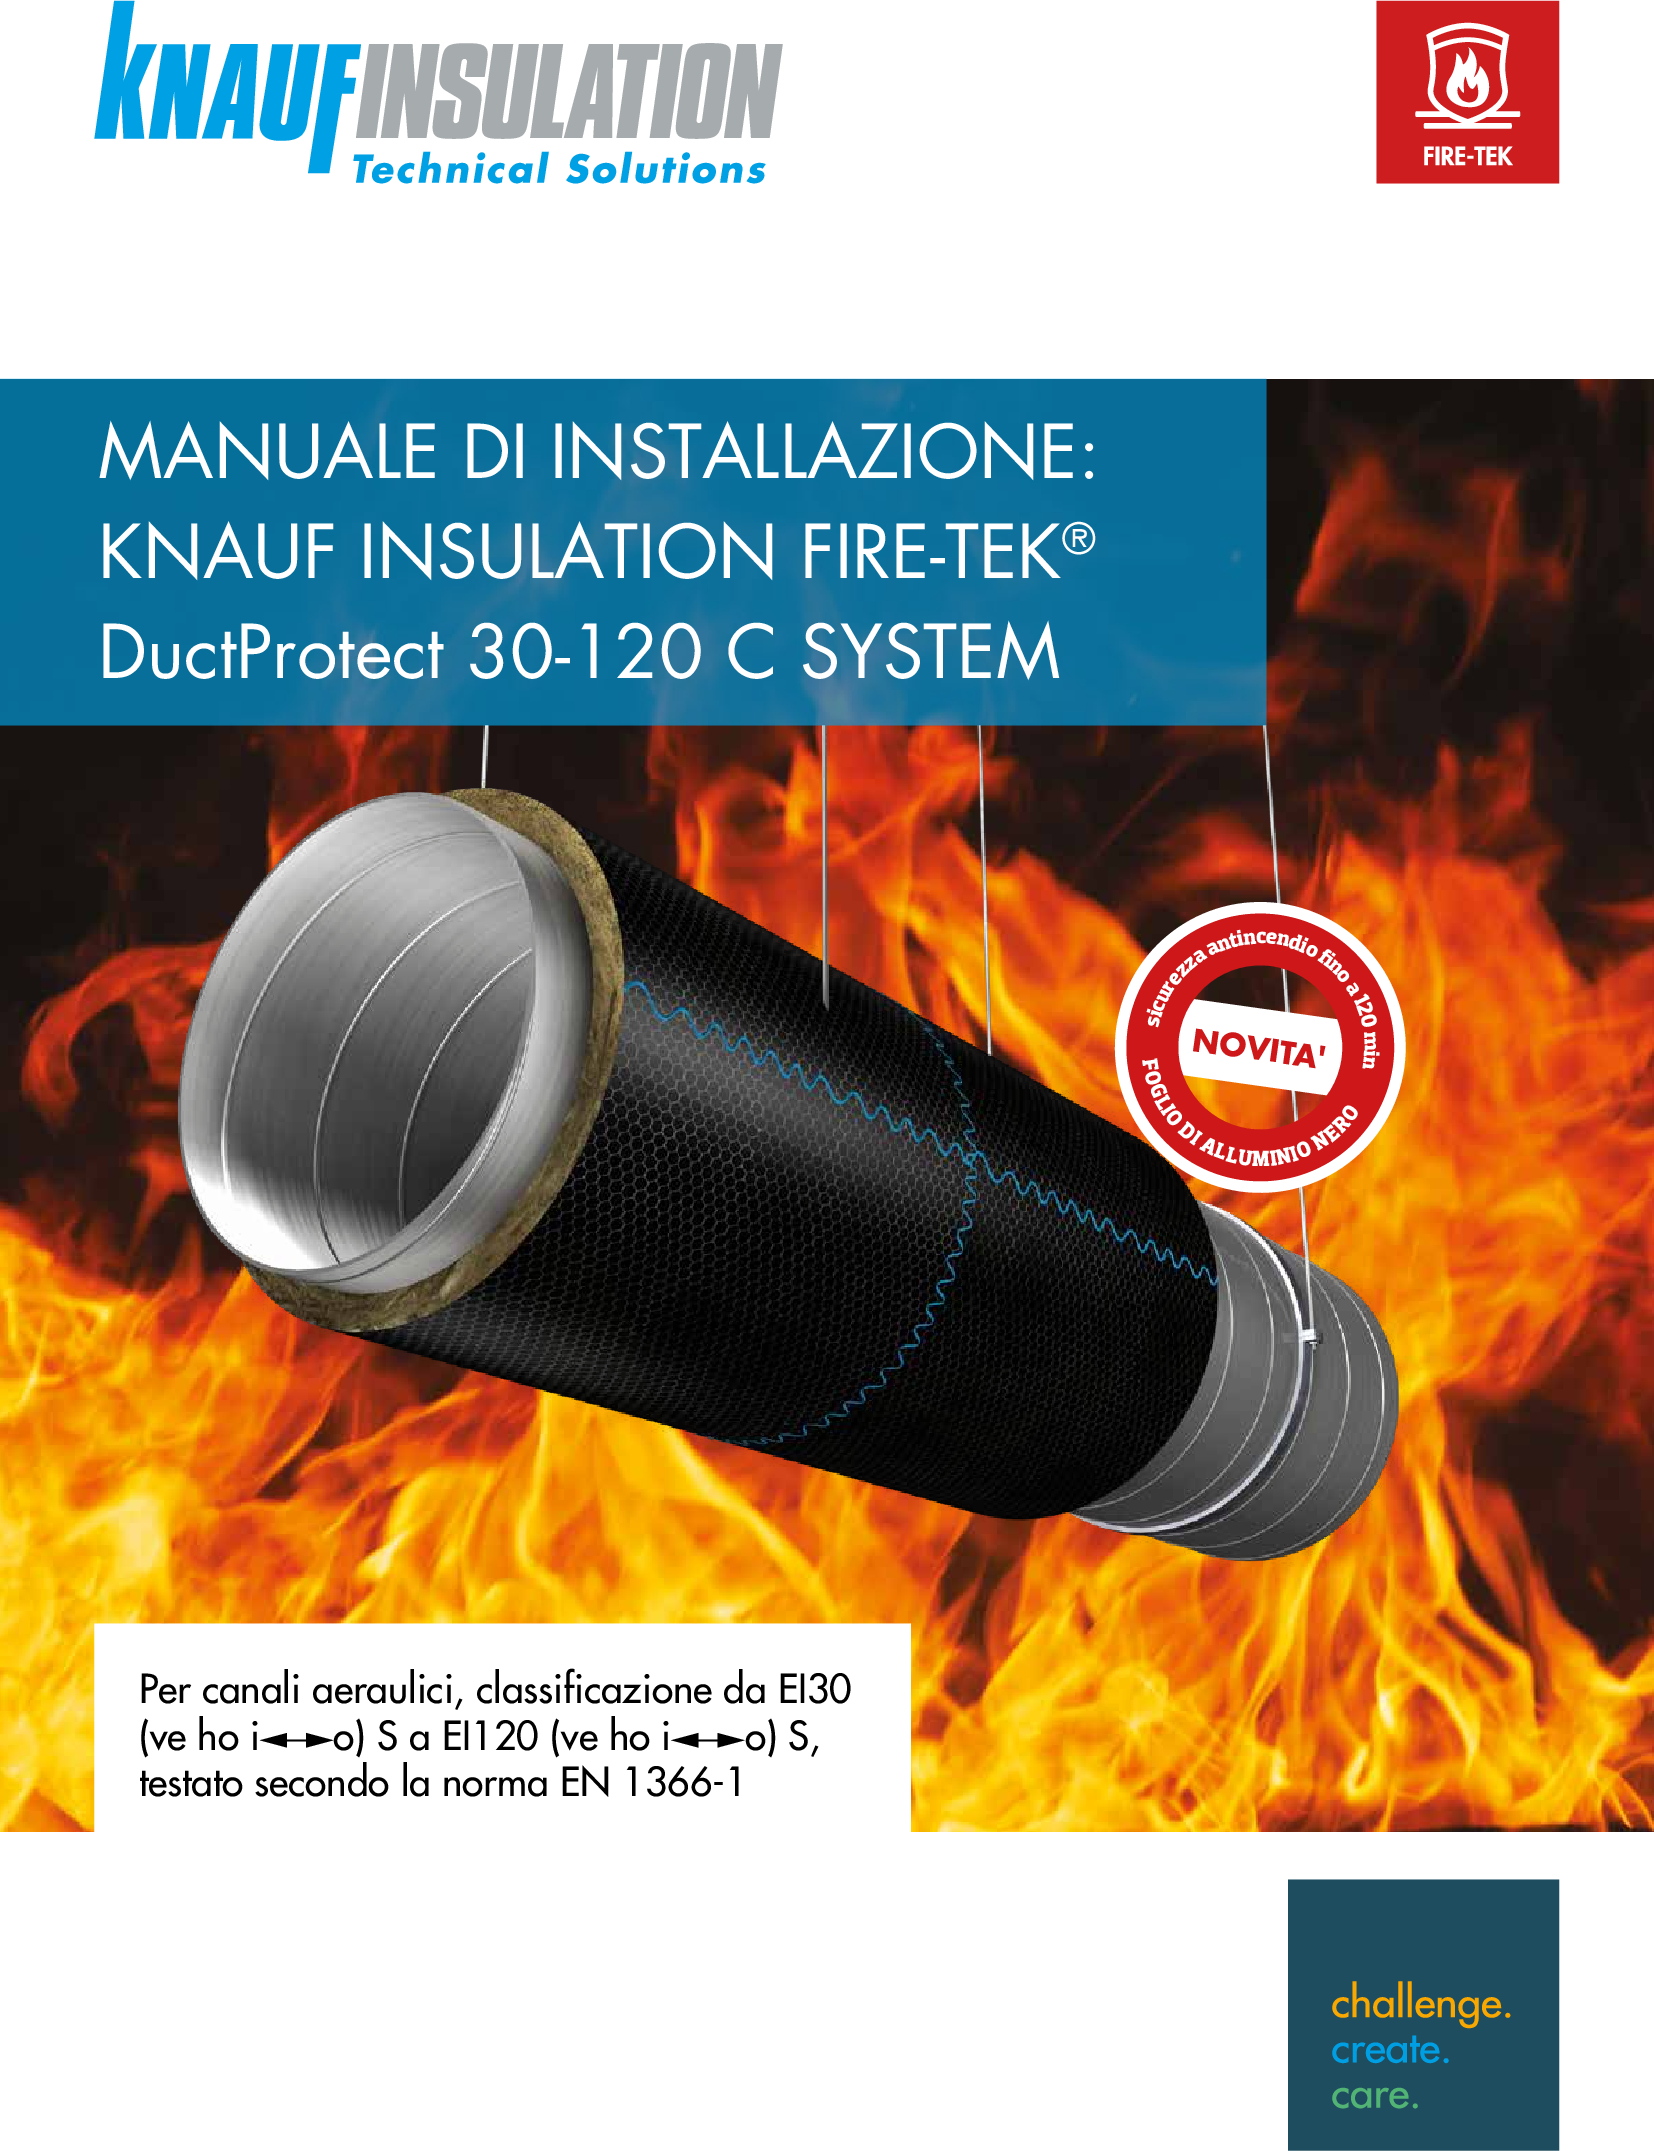 Fire-teK DuctProtect 30-120 C System manual IT